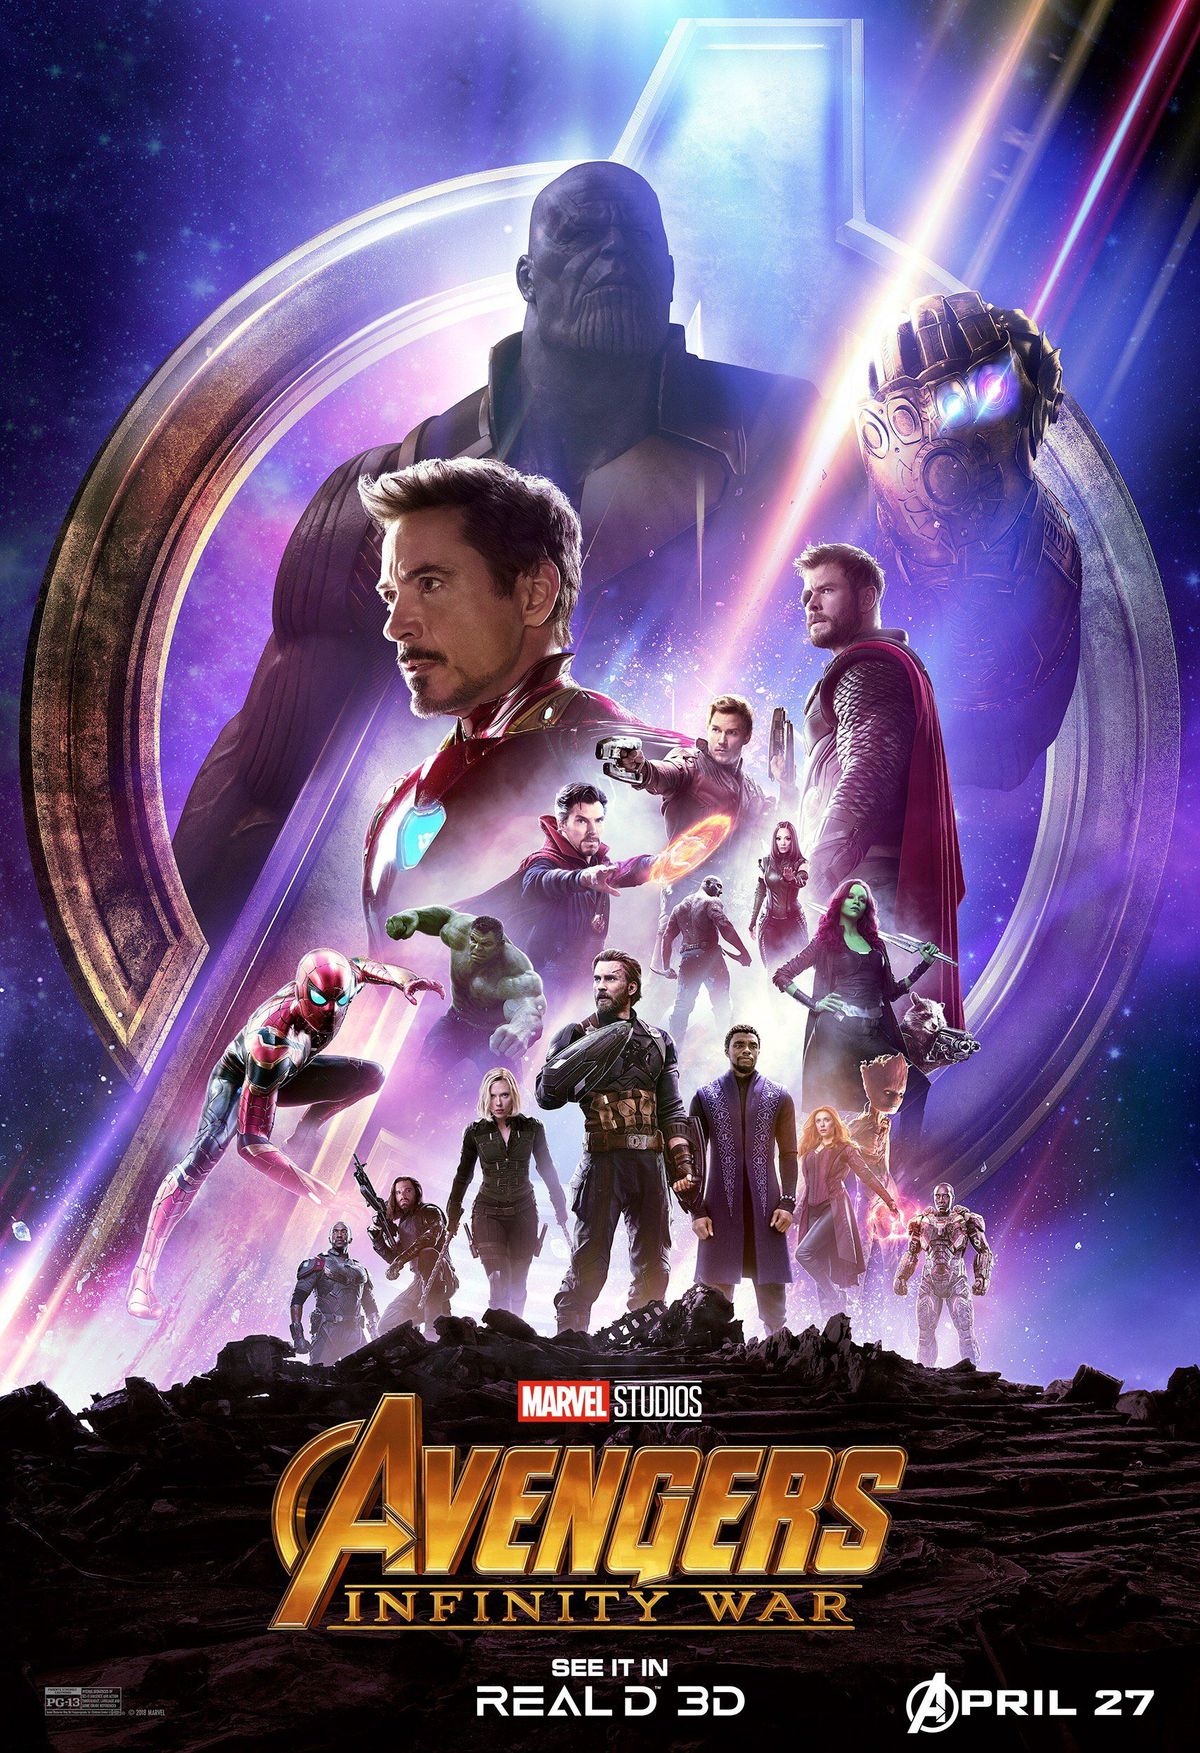 Avengers: Infinity War debuterar fantastiska nya affischer